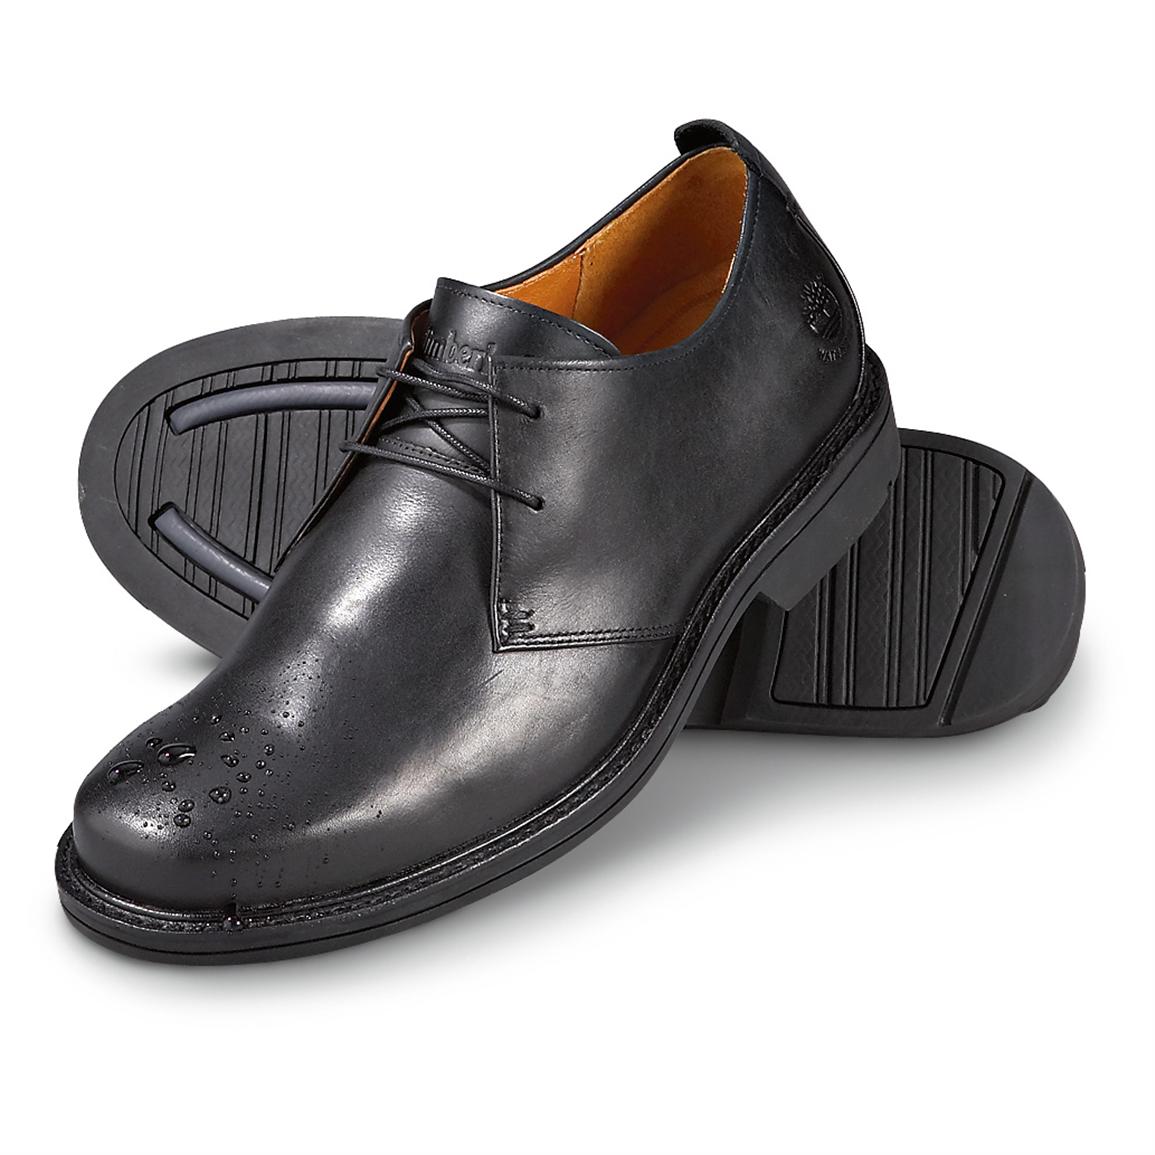 Men's TimberlandÂ® Waterproof Bramley Dress Shoes, Black - 146077, Dress Shoes at Sportsman's Guide